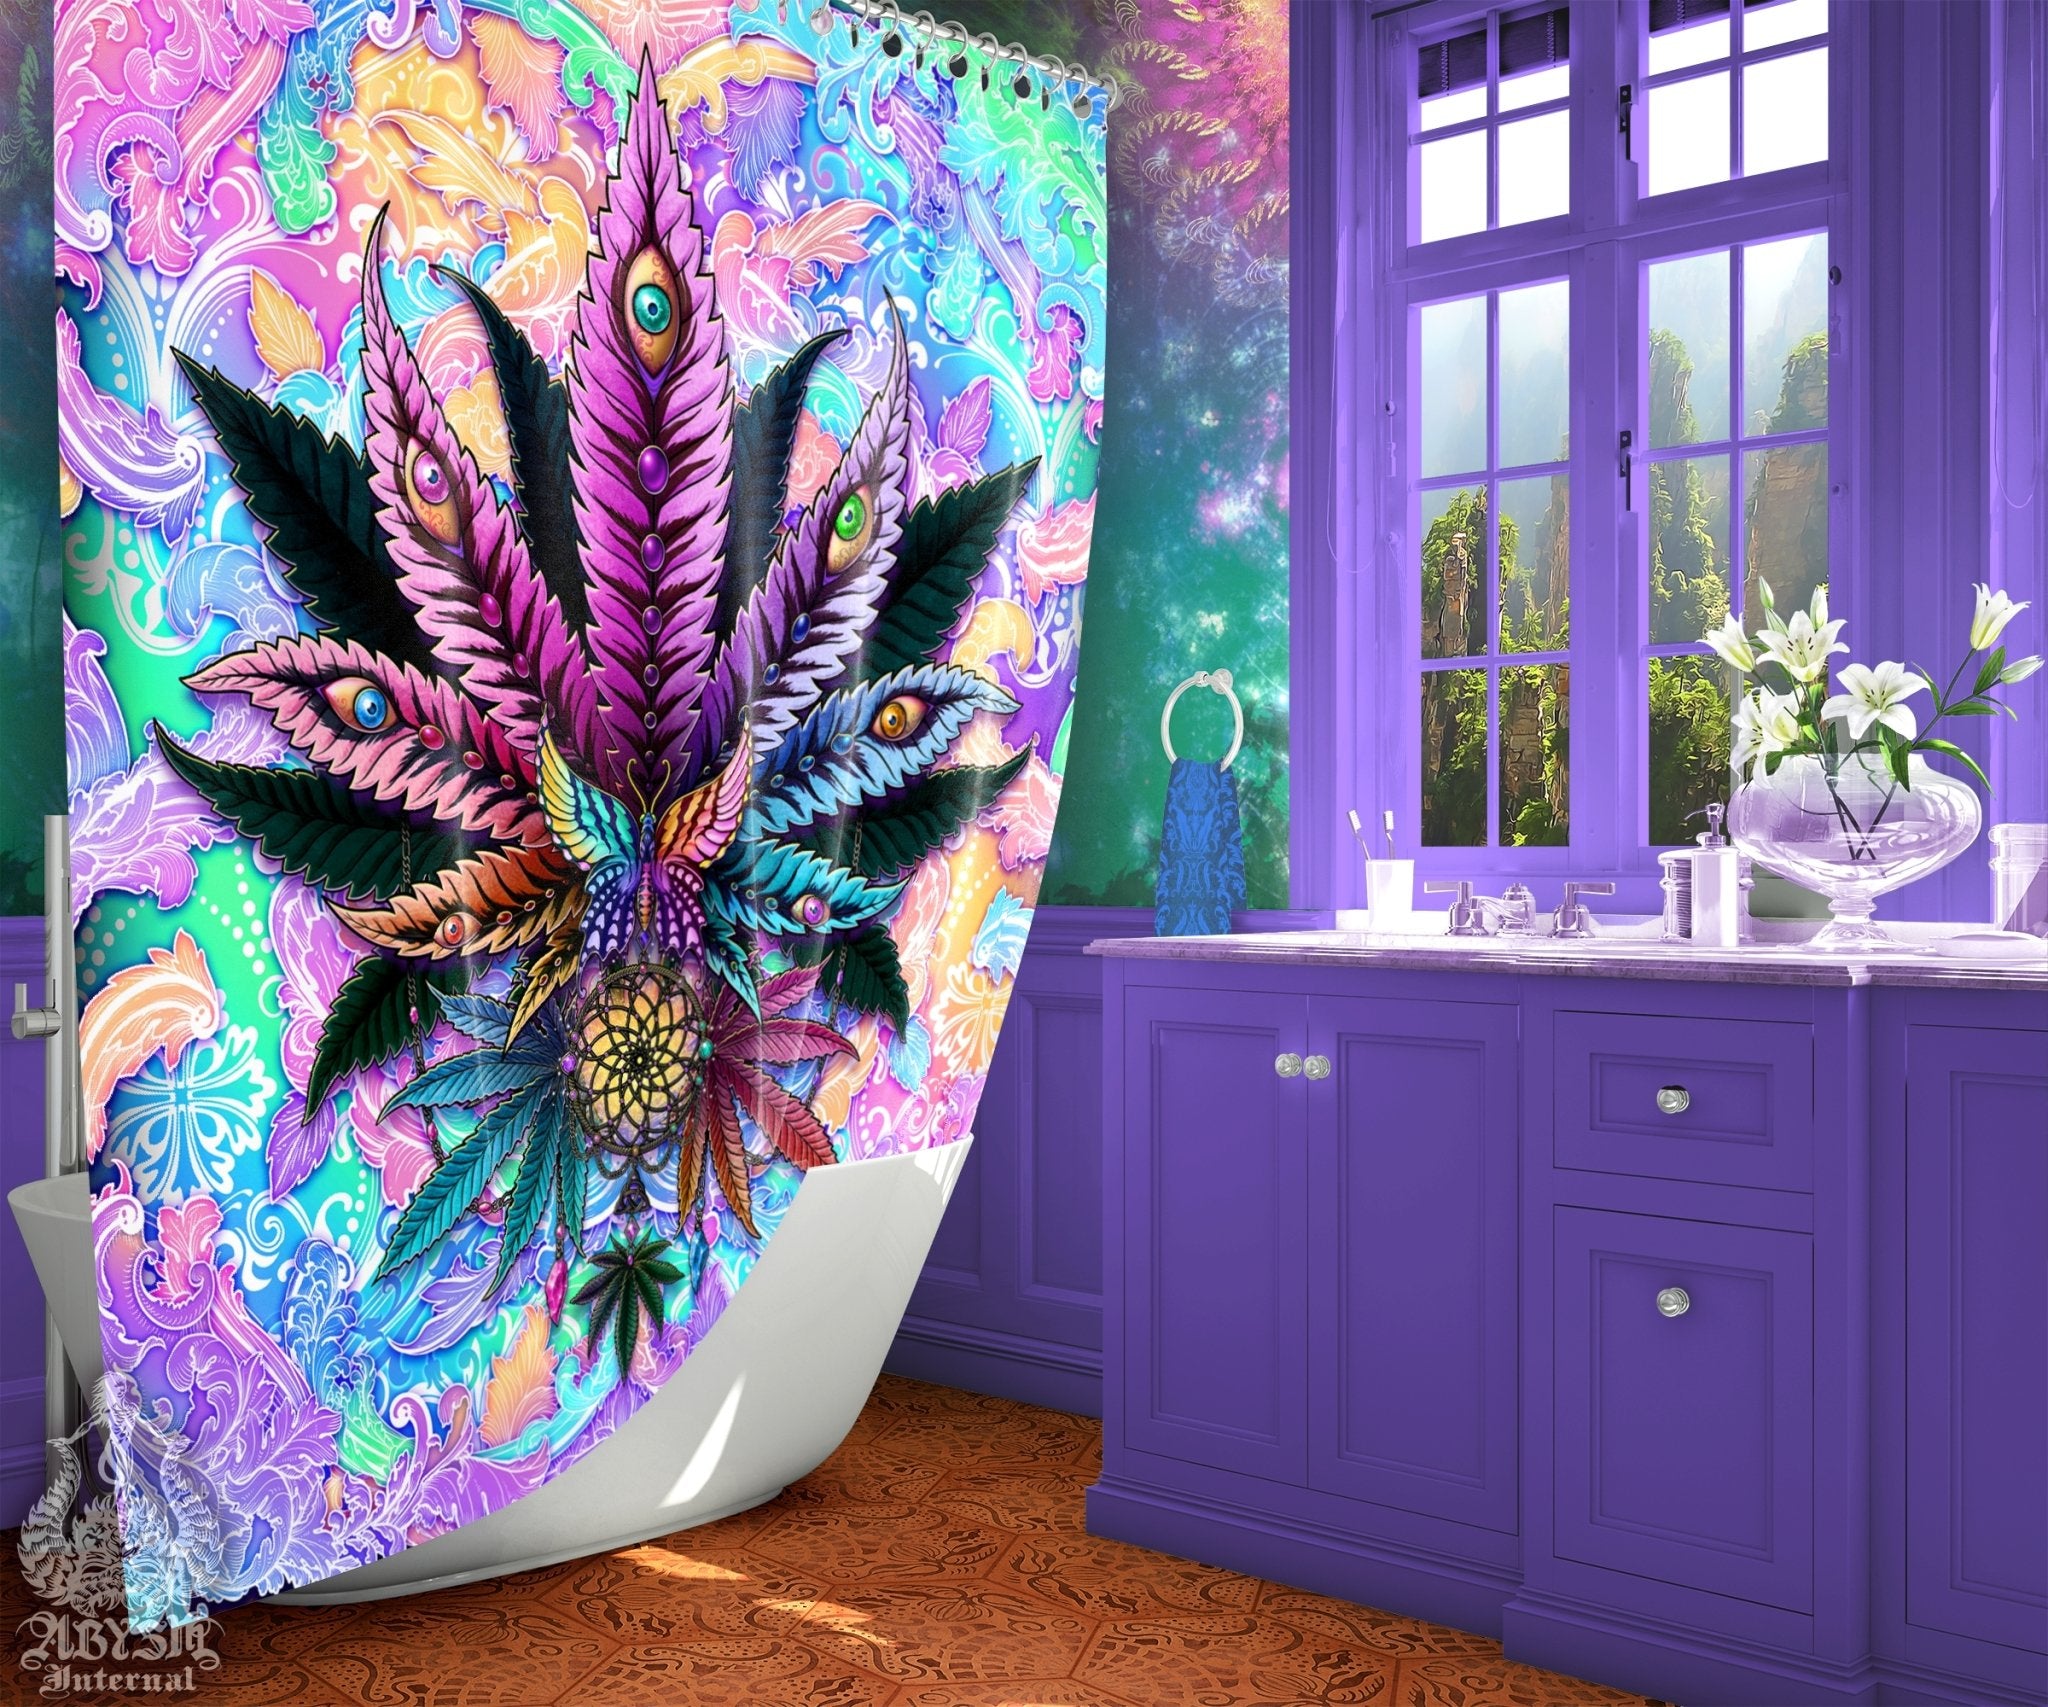 Weed Shower Curtain, Aesthetic Bathroom Decor, Indie Cannabis Print, Hippie 420 Home Art - Marijuana, Pastel Black - Abysm Internal